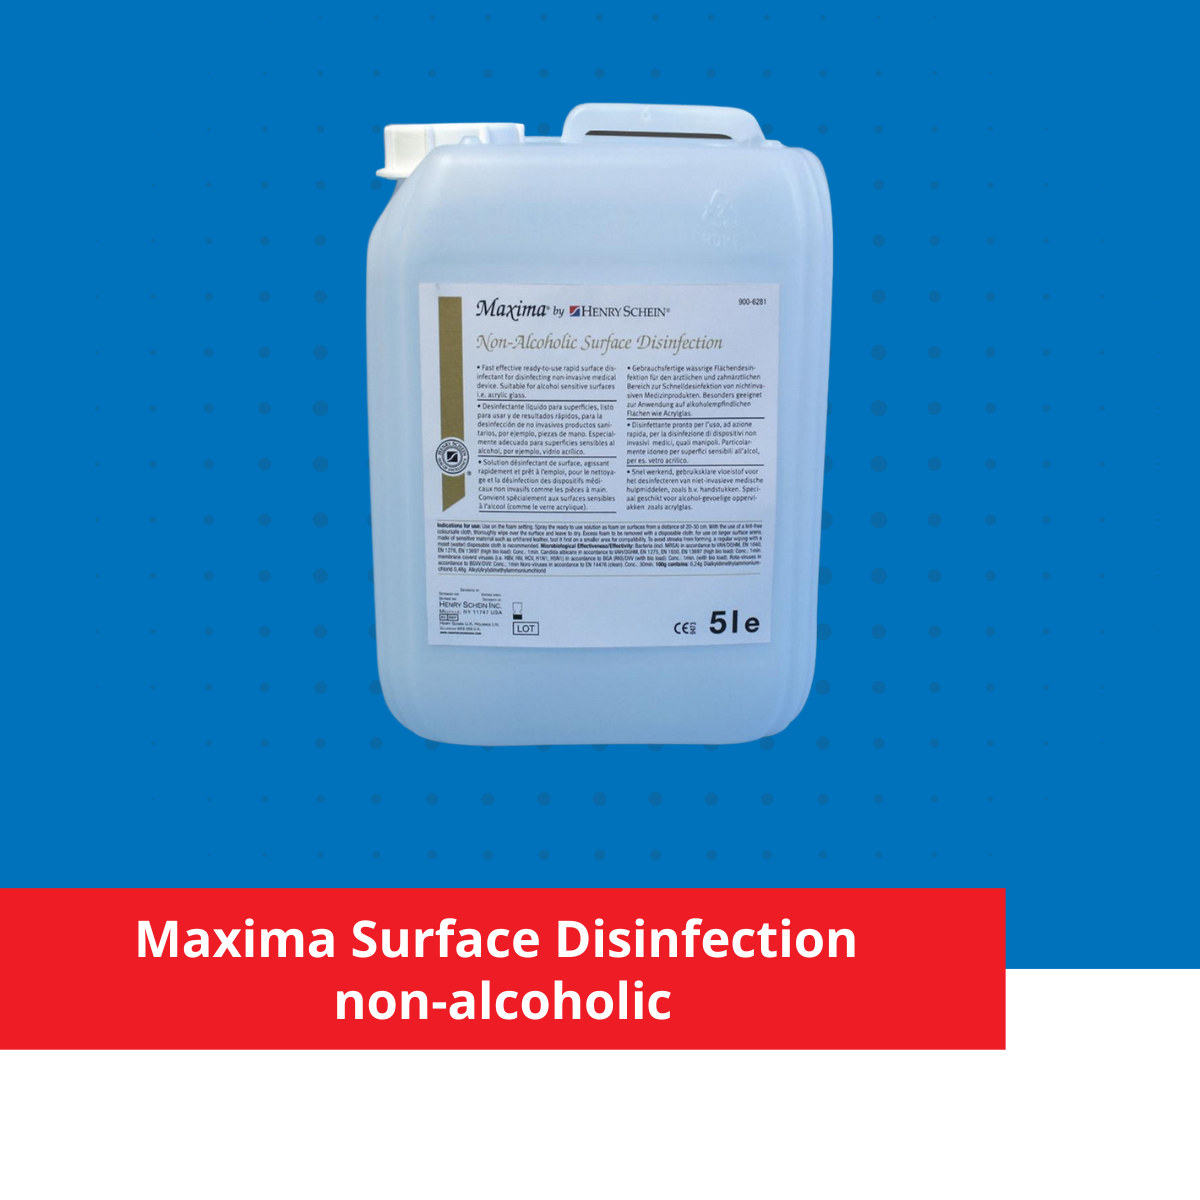 Maxima Surface Disinfection non-alcoholic